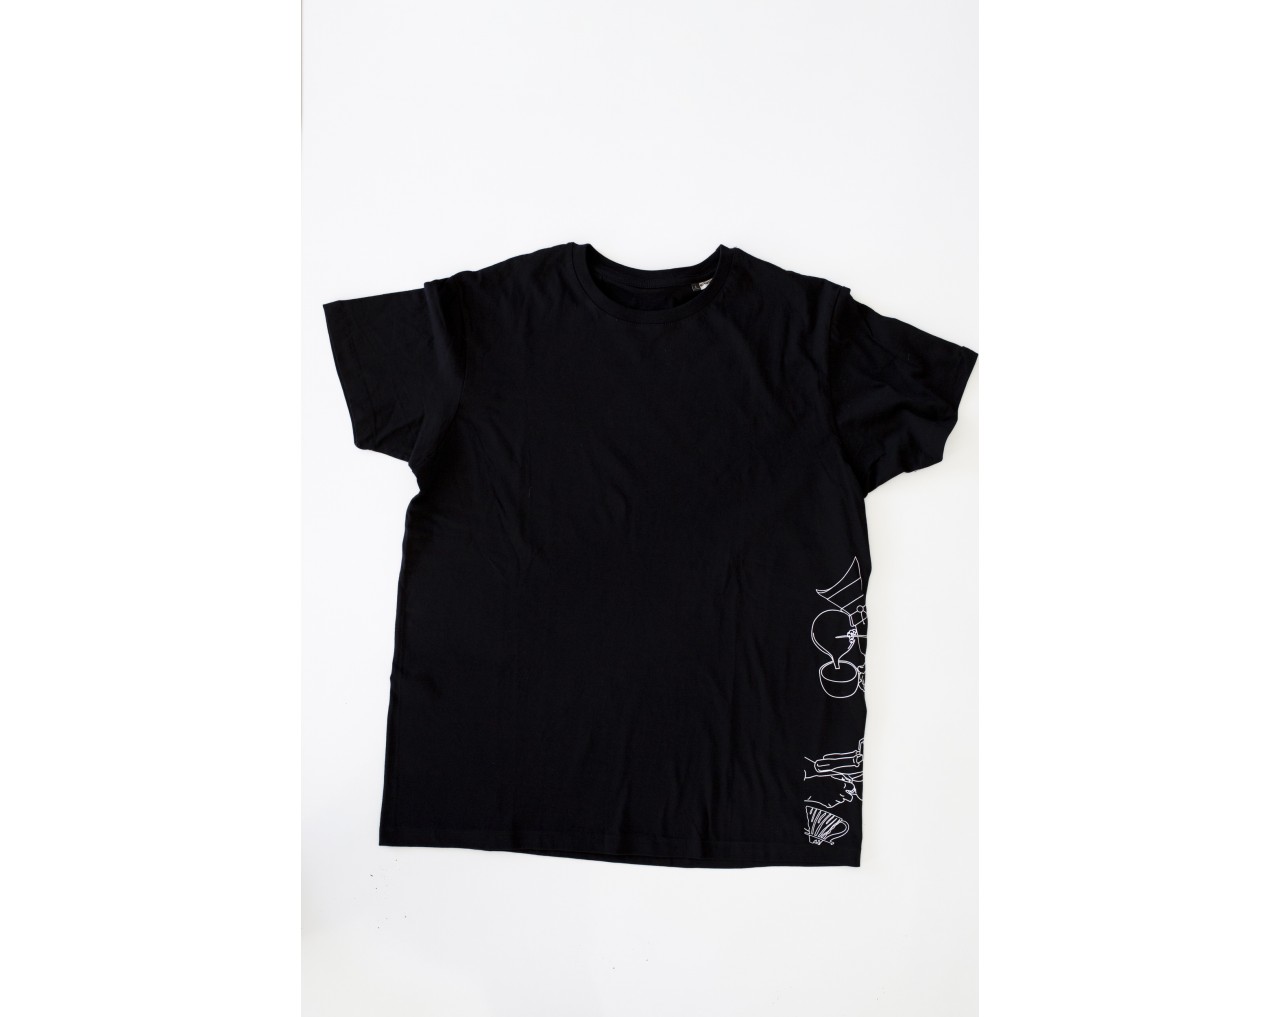 Taf Black T-shirt